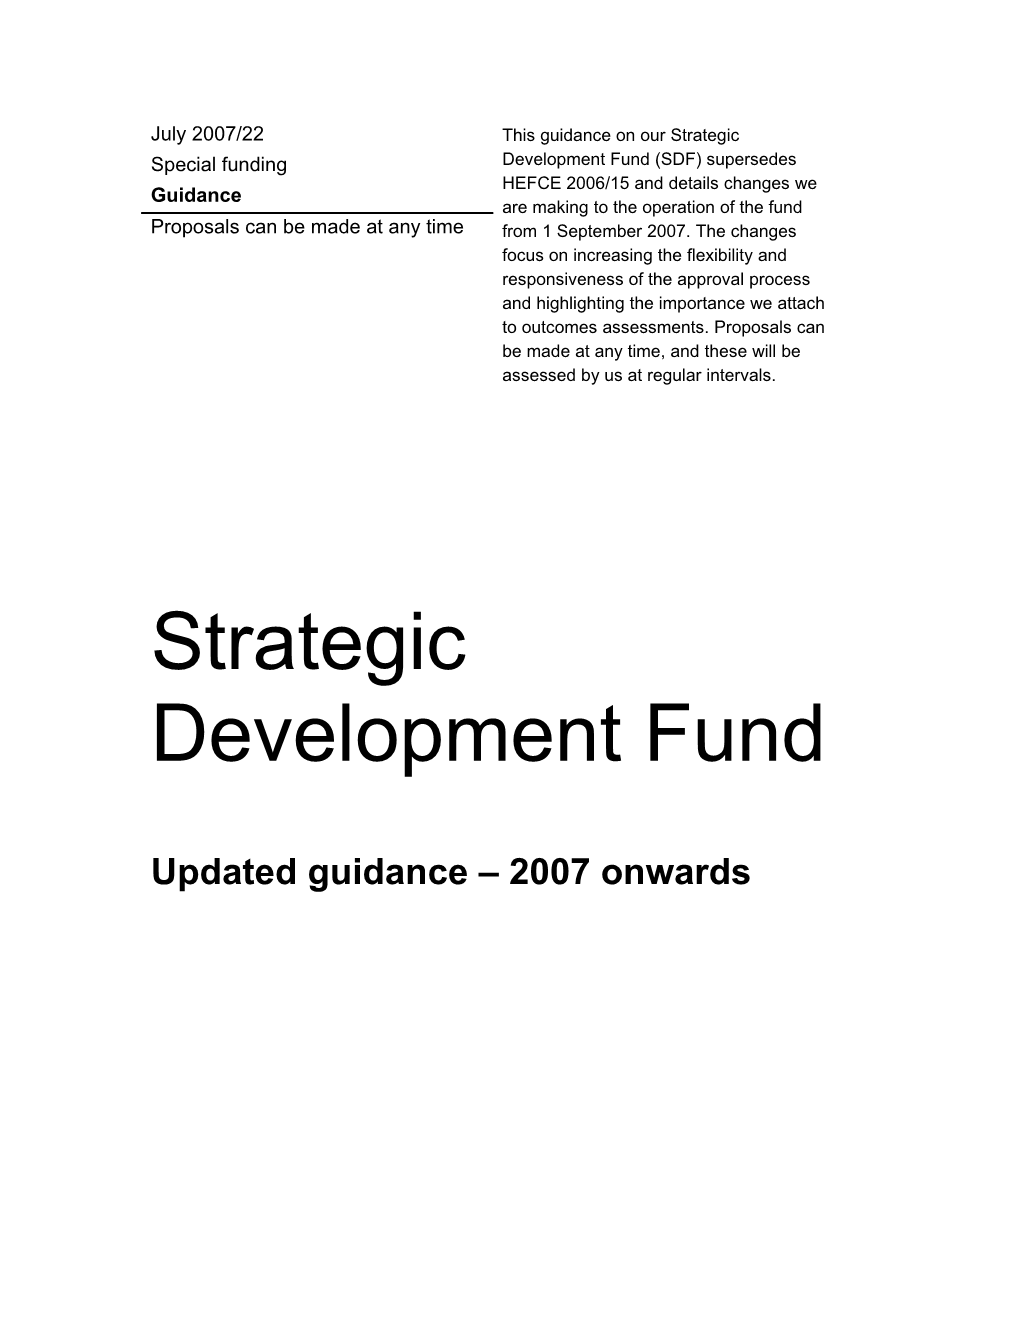 Strategic Development Fund